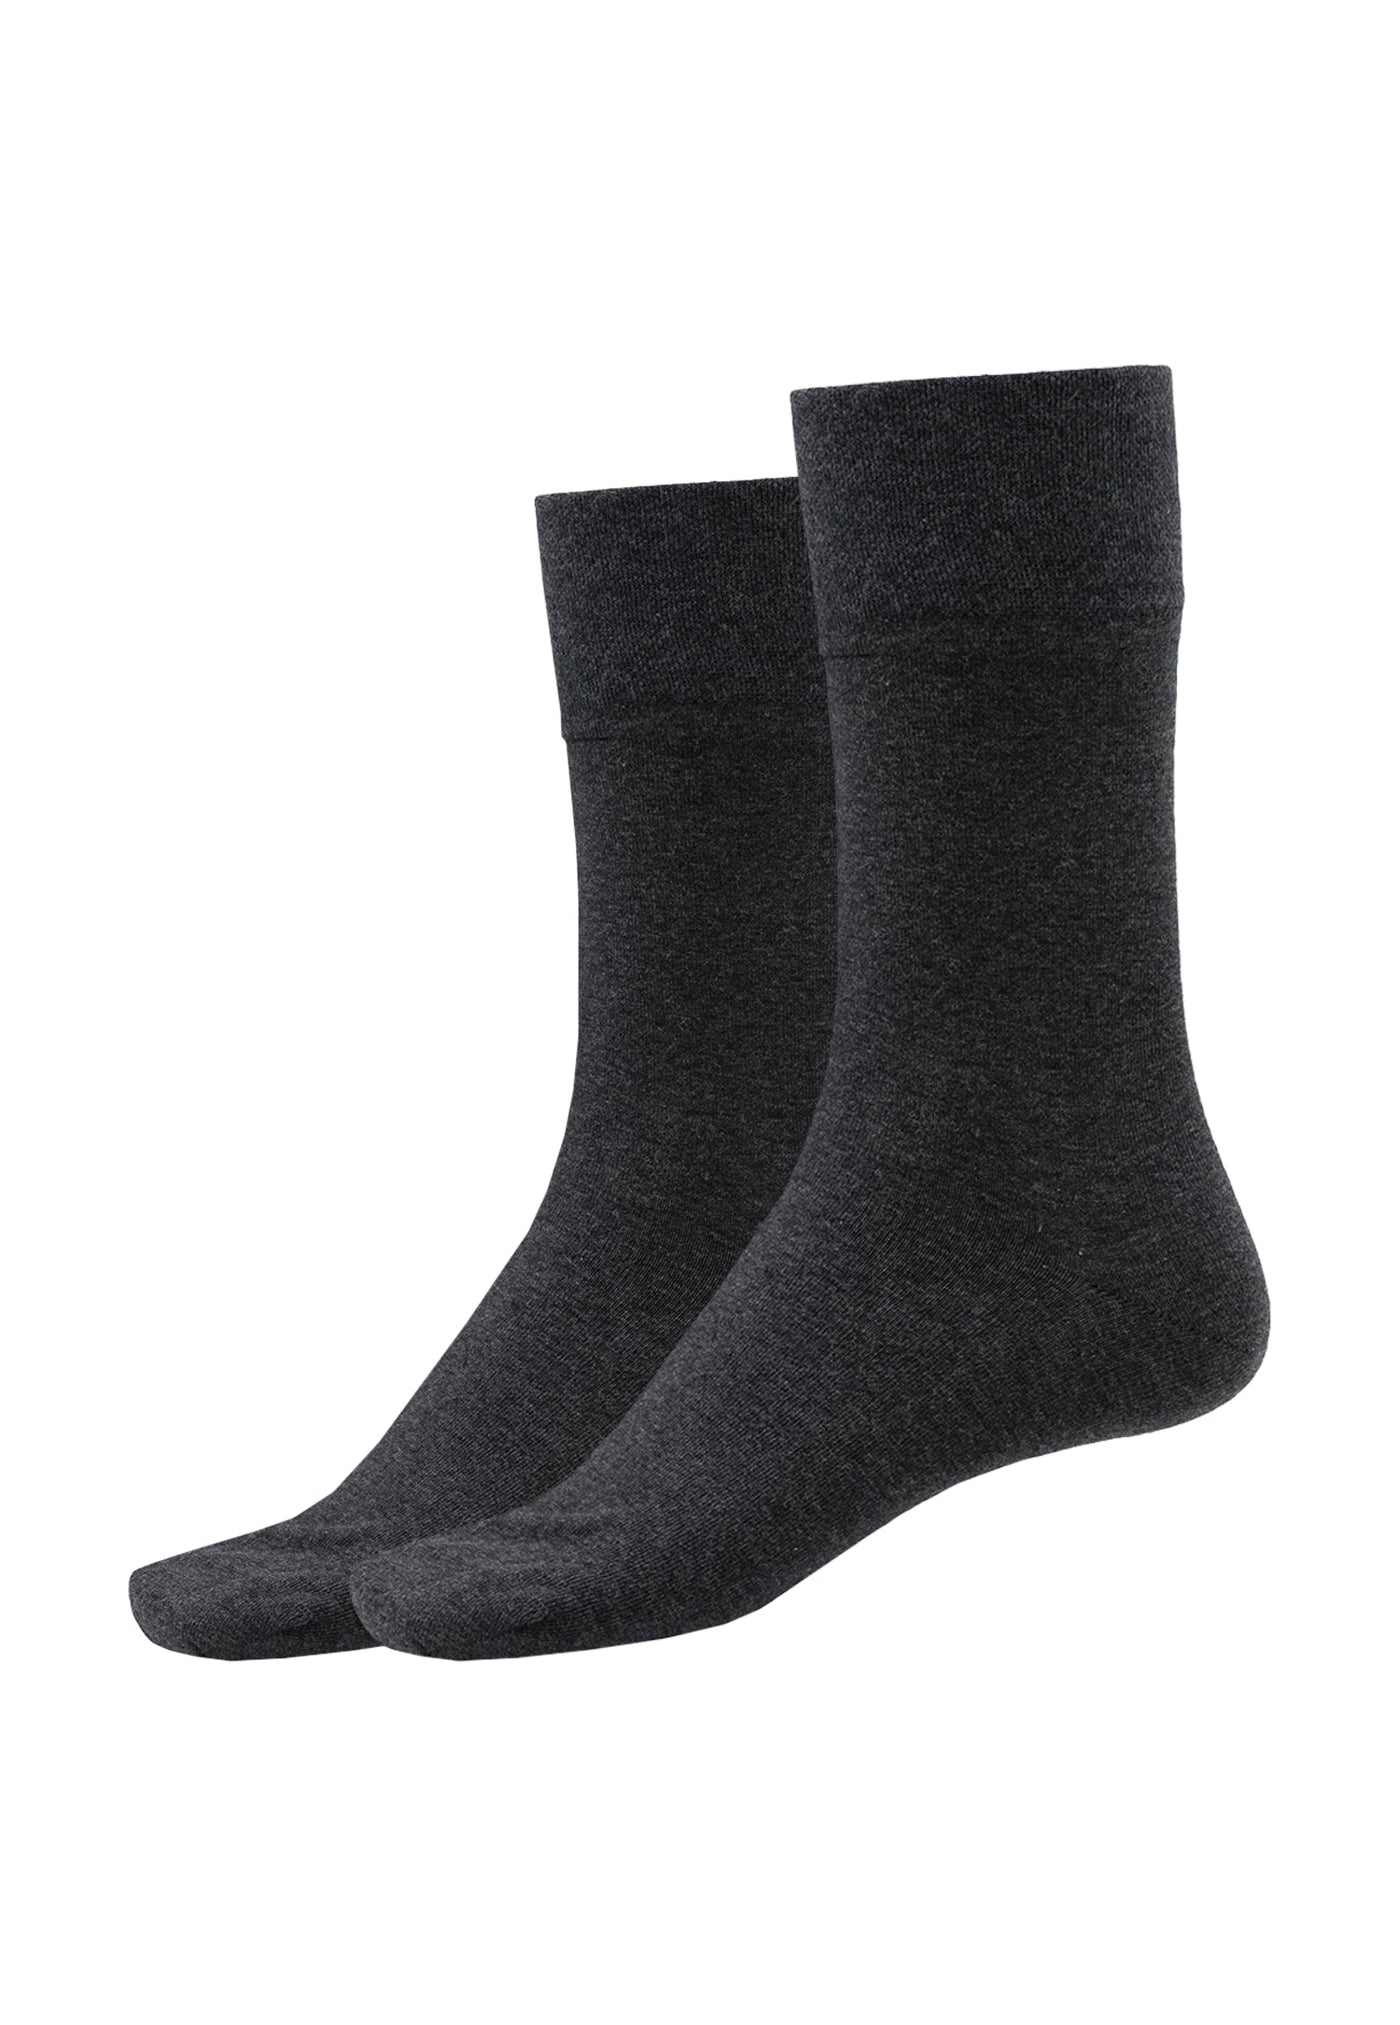 Schiesser - Long Life Cool - Men Socks - 2 Pack - Sale